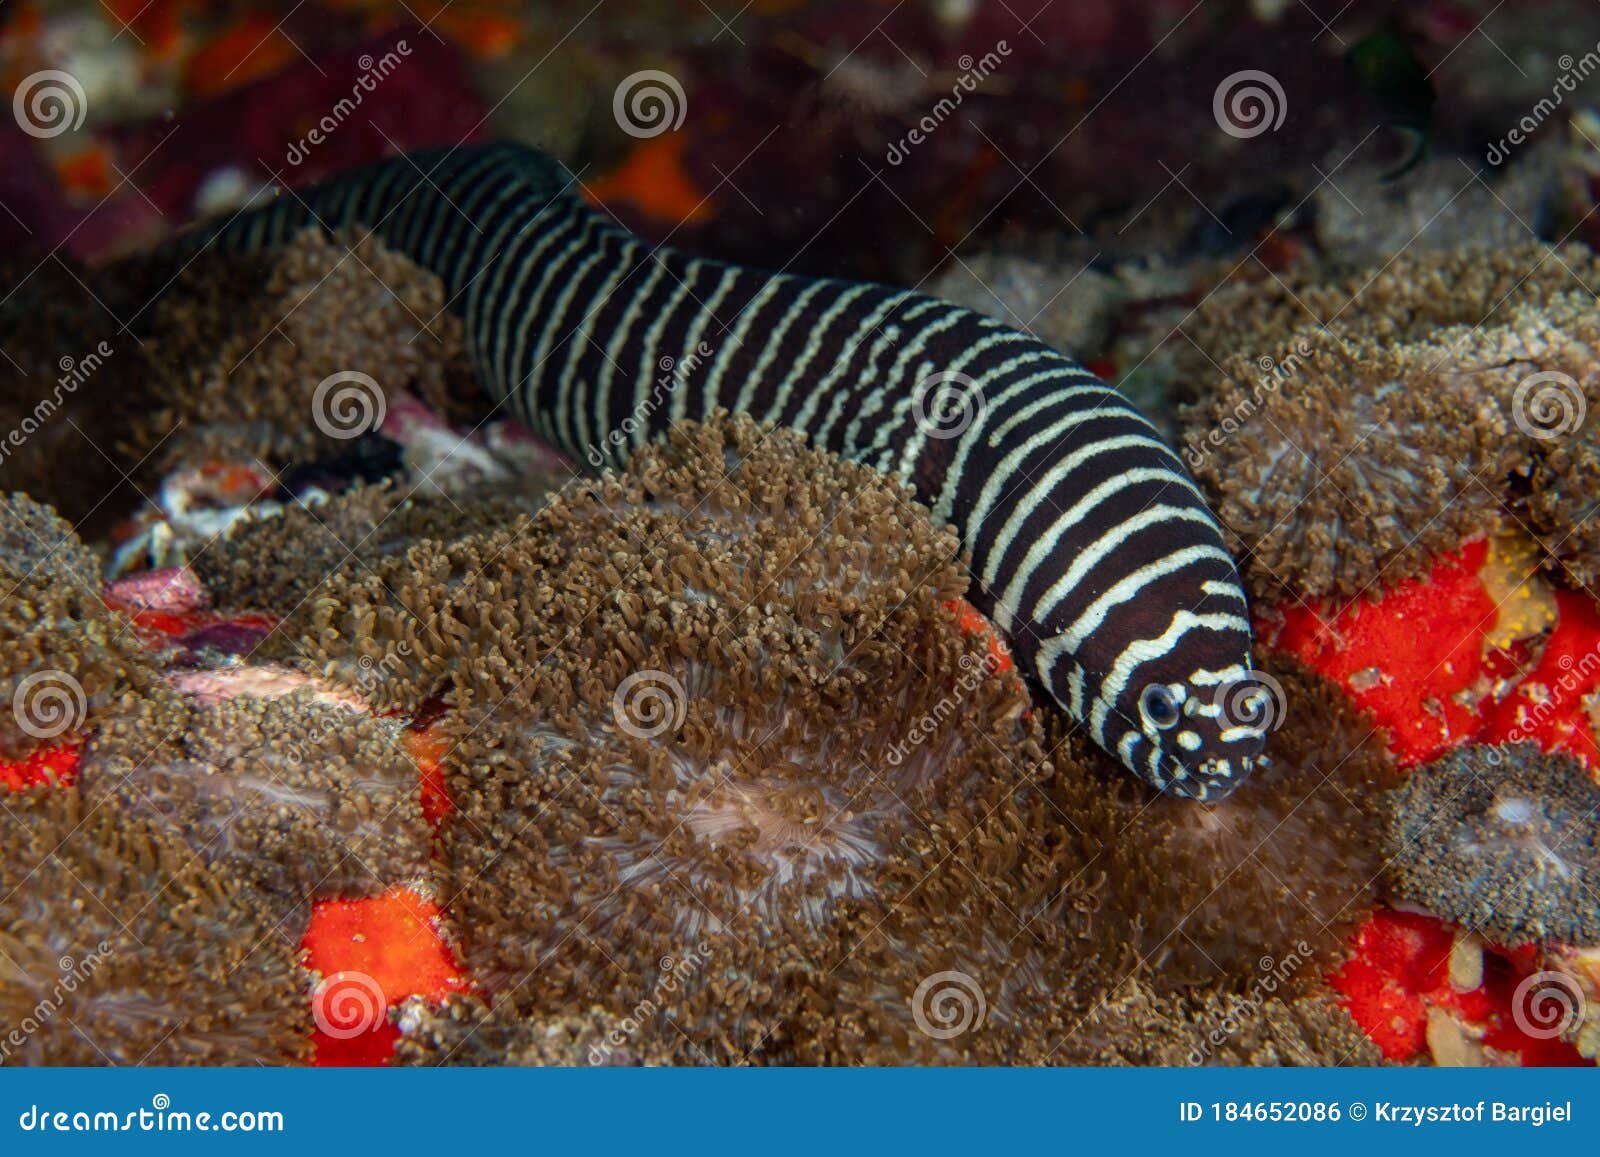 zebra moray eel, gymnomuraena zebra living in a tropical coral reef of similan islands thailand.